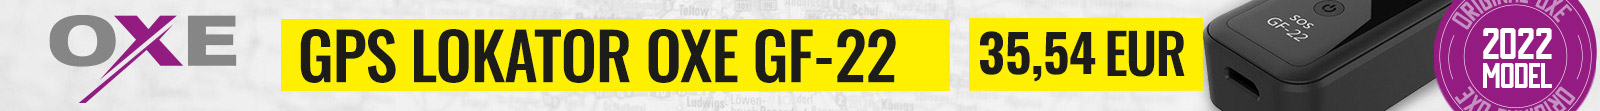 OXE GF-22 - GPS lokator